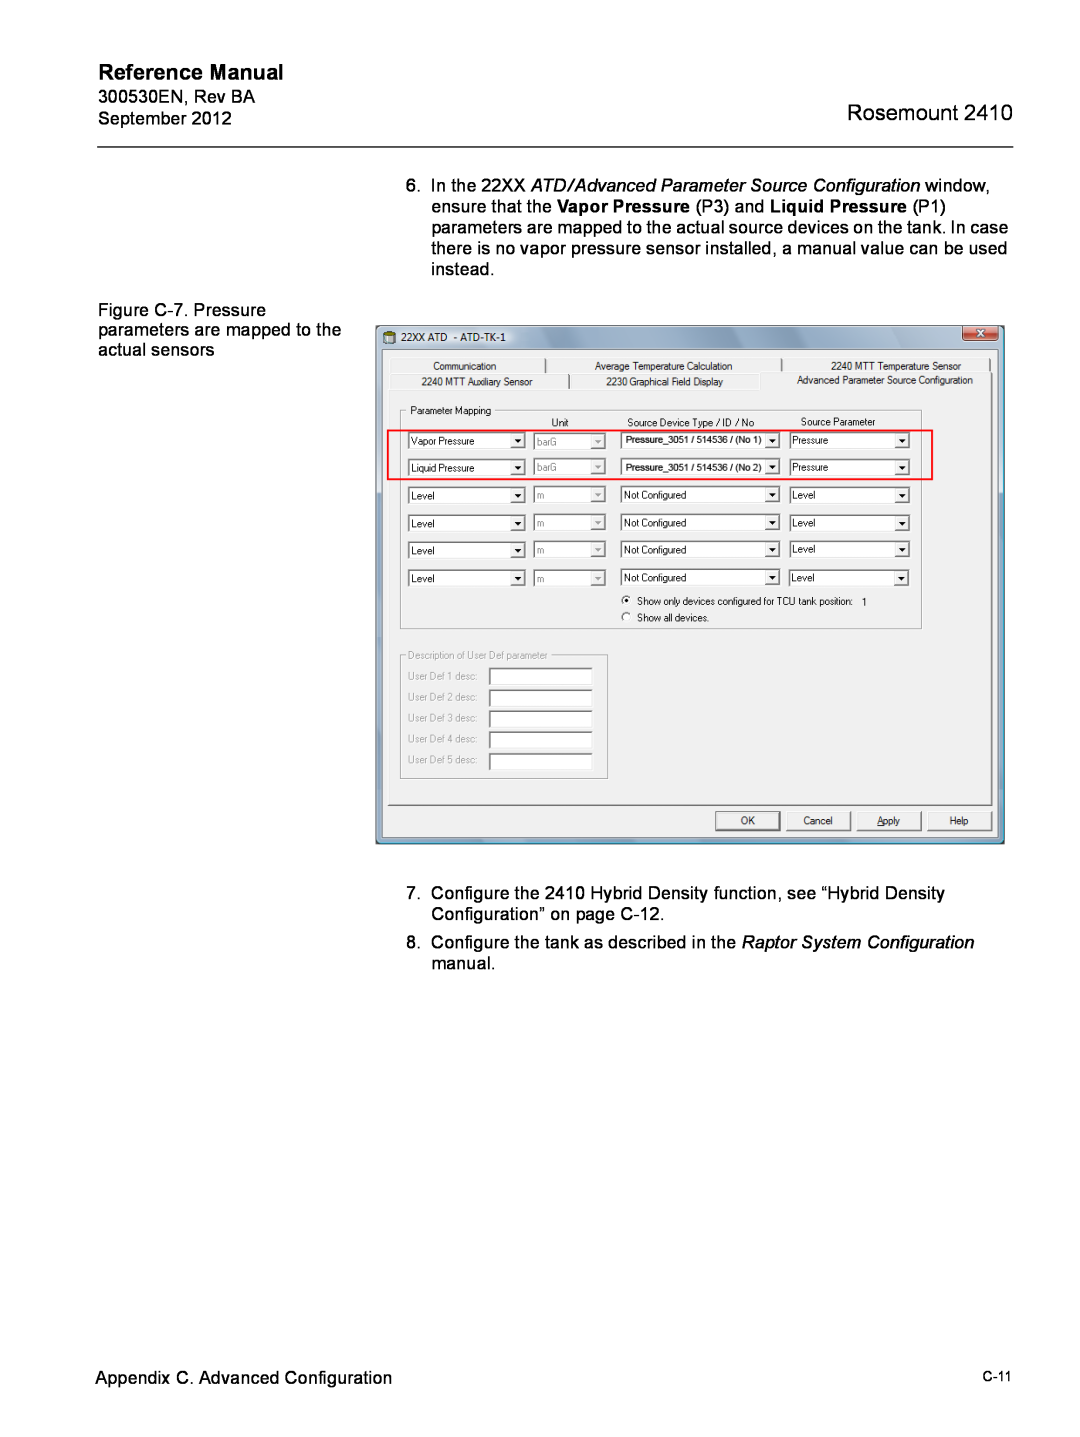 Emerson Process Management Rosemount 2410 manual Reference Manual, C-11 